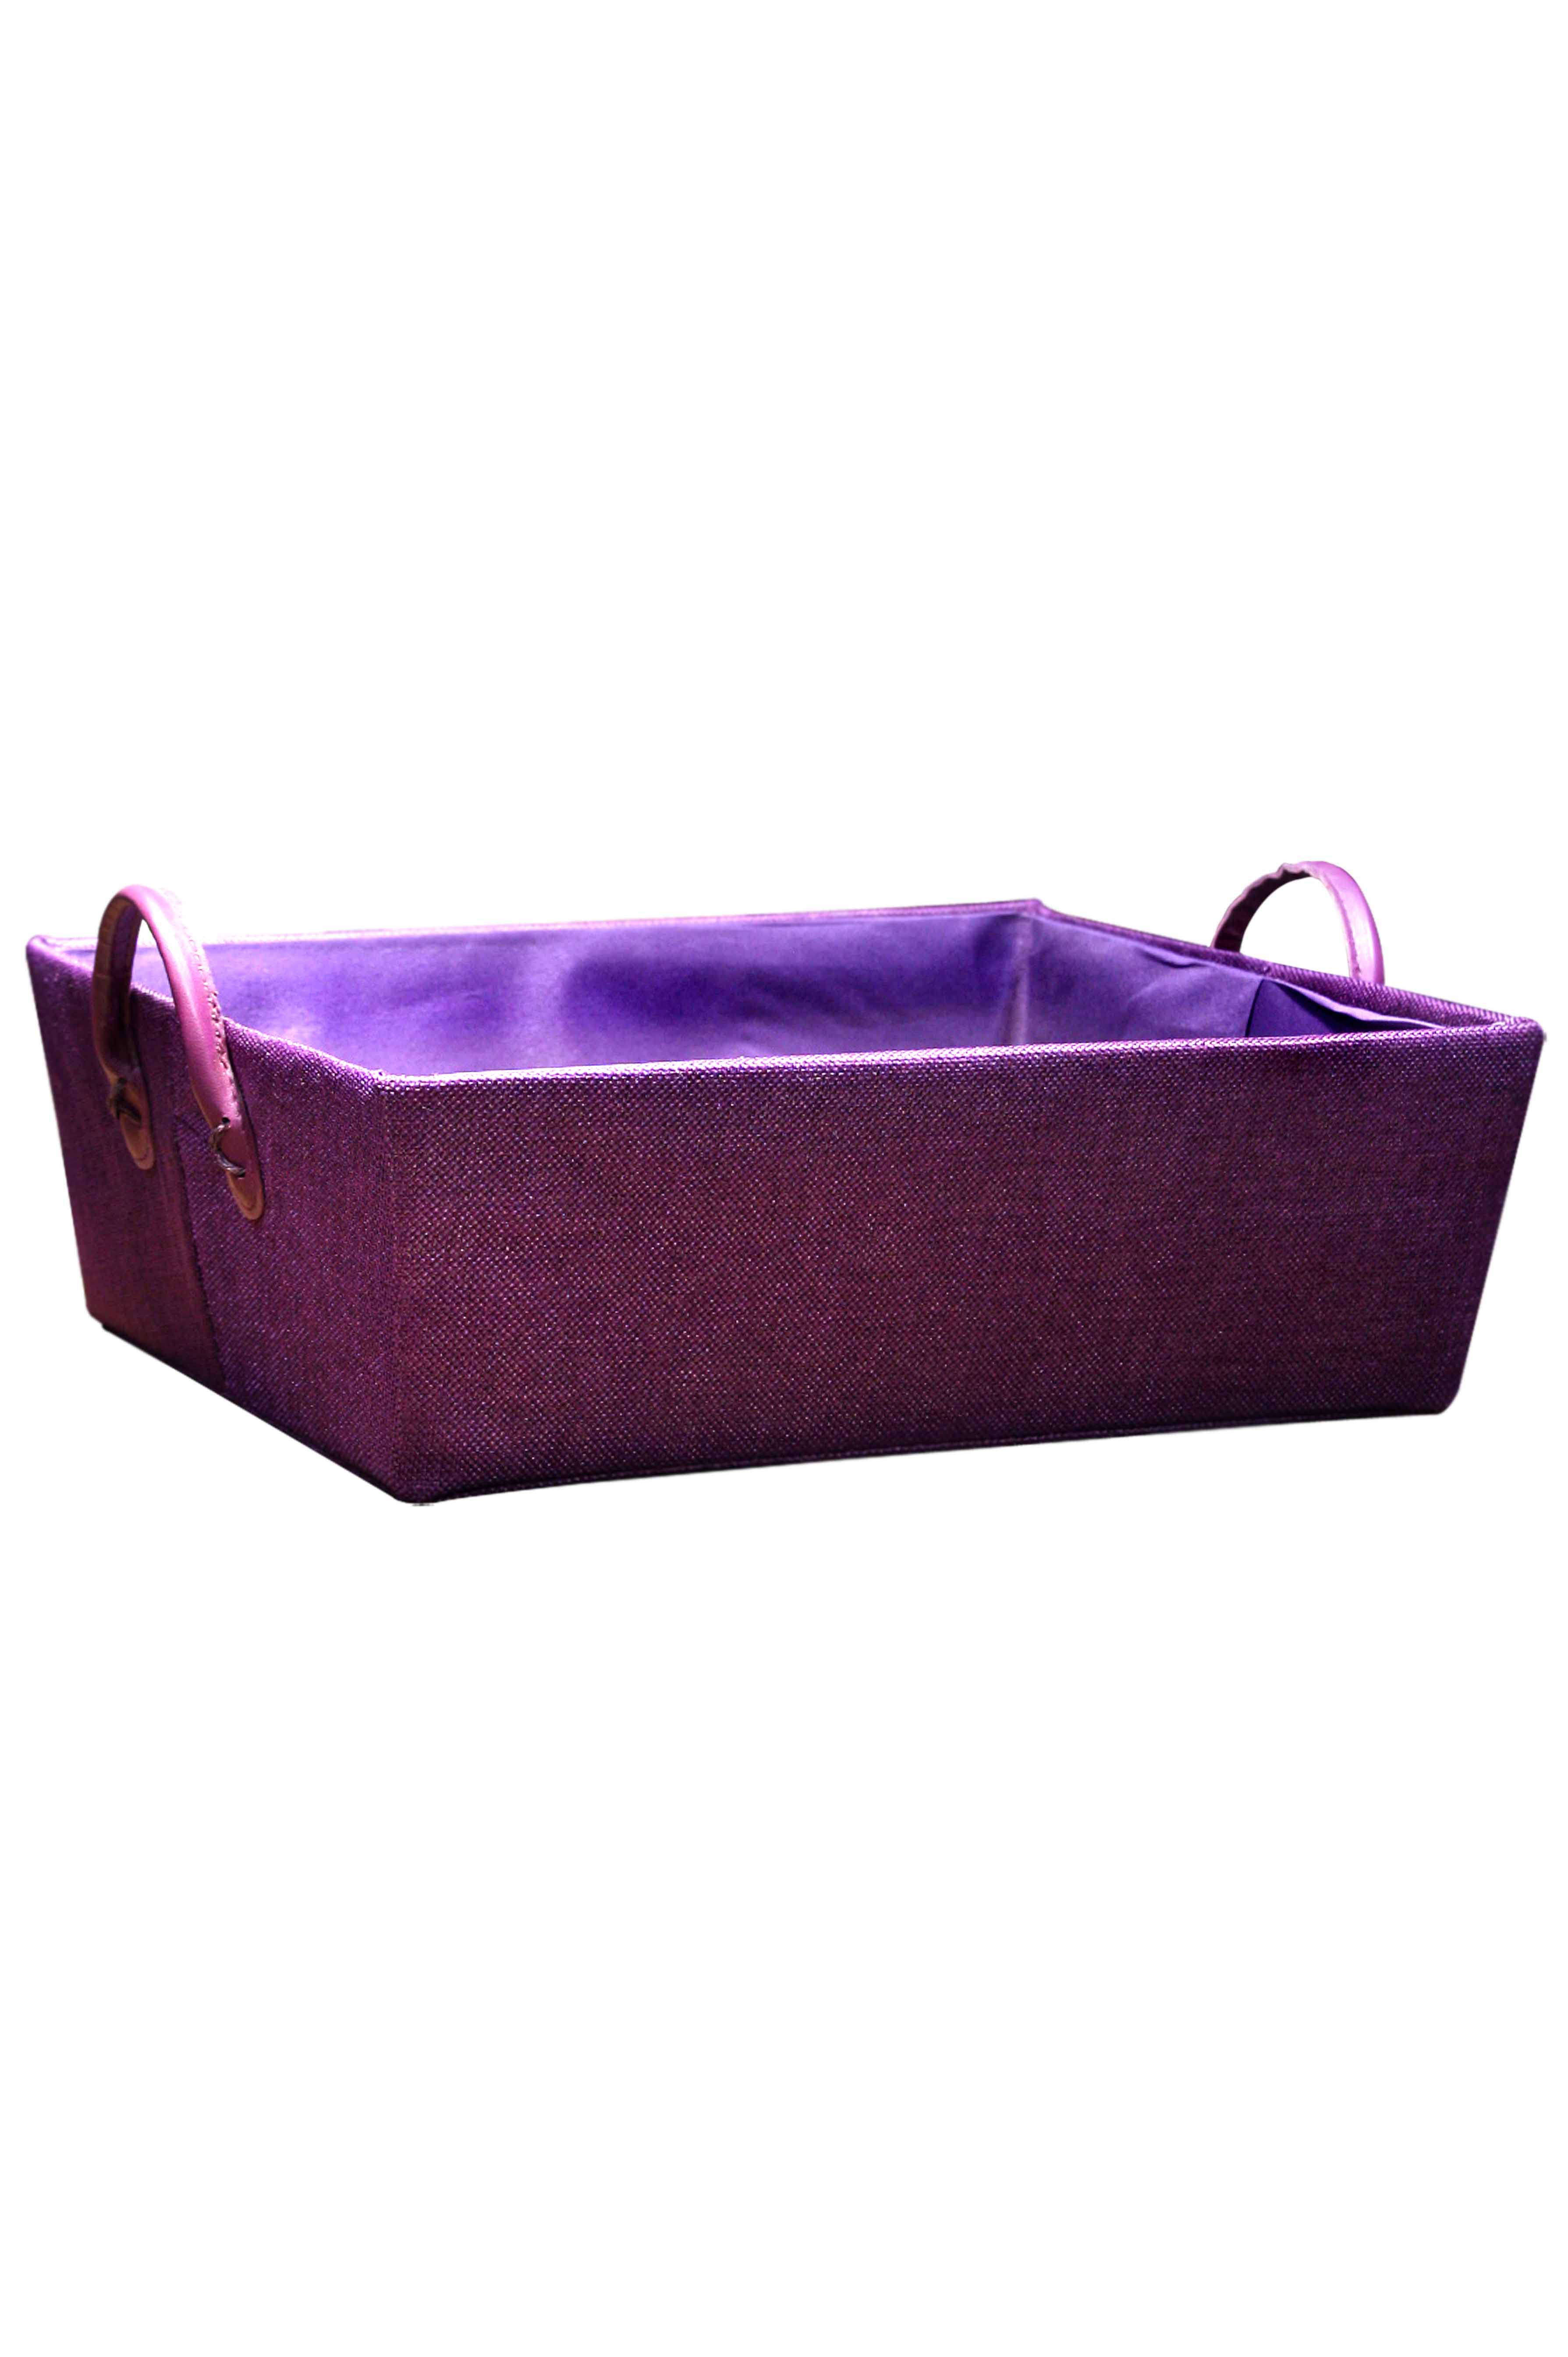 Lisa violet tray